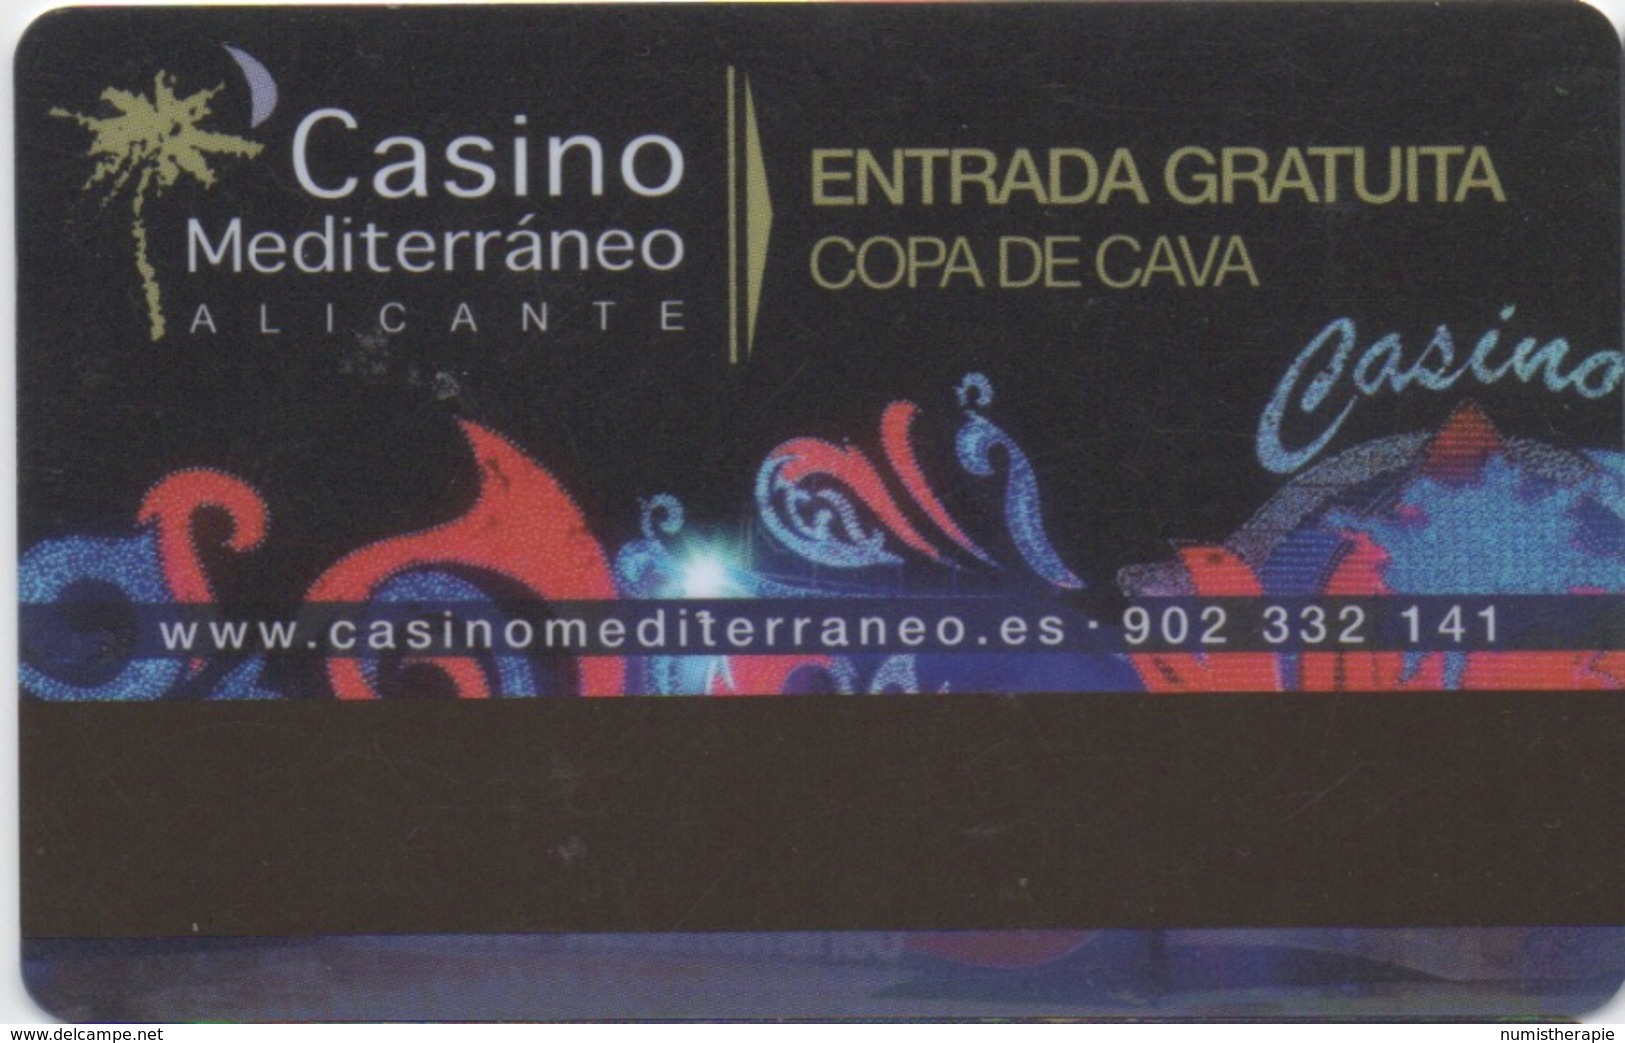 Carte Clé Hôtel Avec Invitation Casino Mediterráneo Alicante .es - Cartes D'hotel